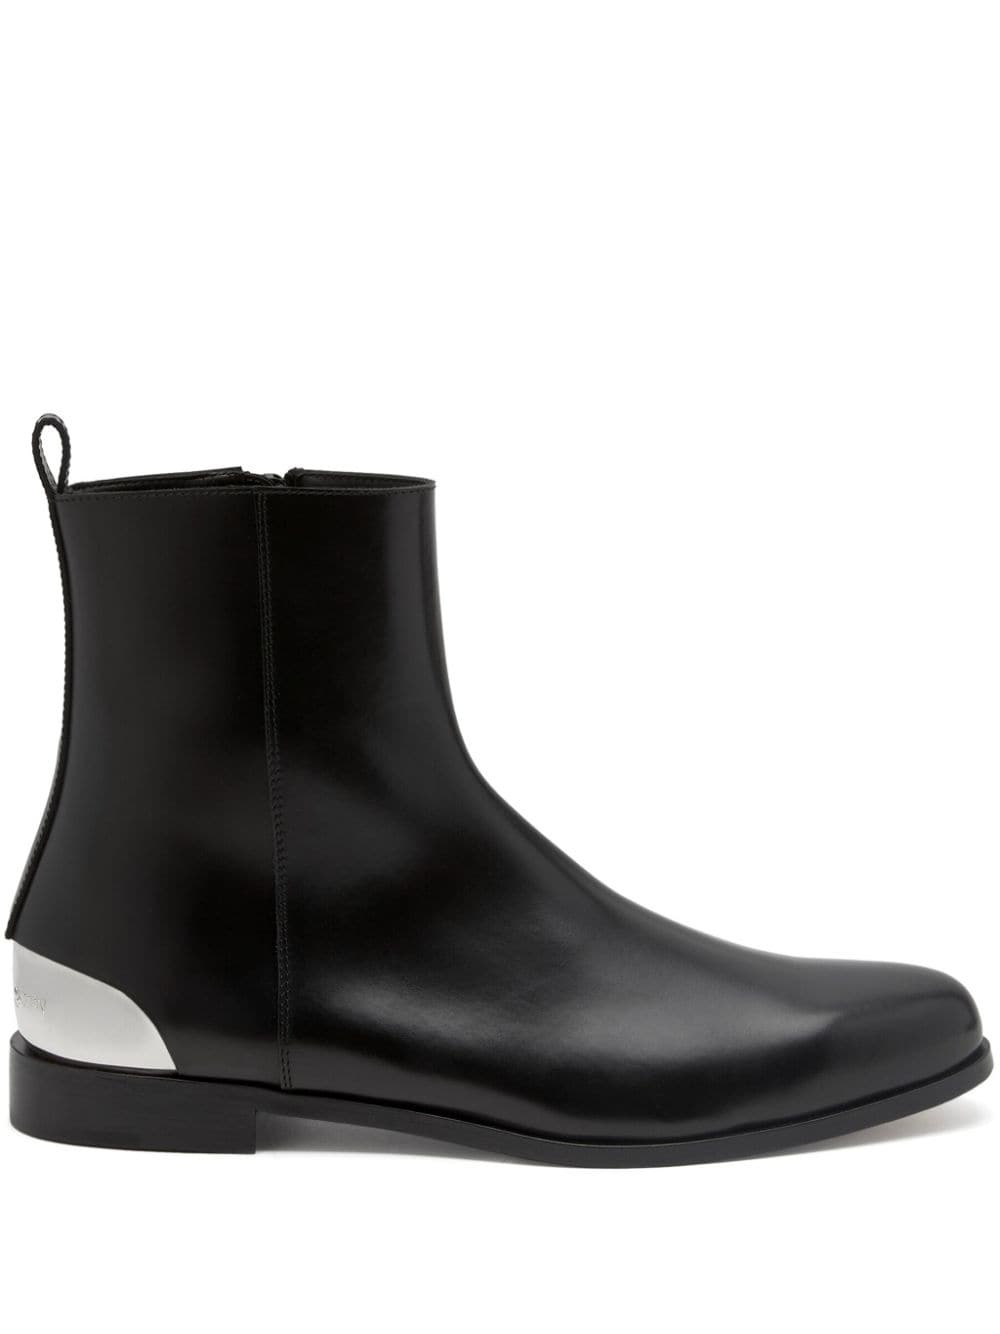 metal-heel leather boots - 1